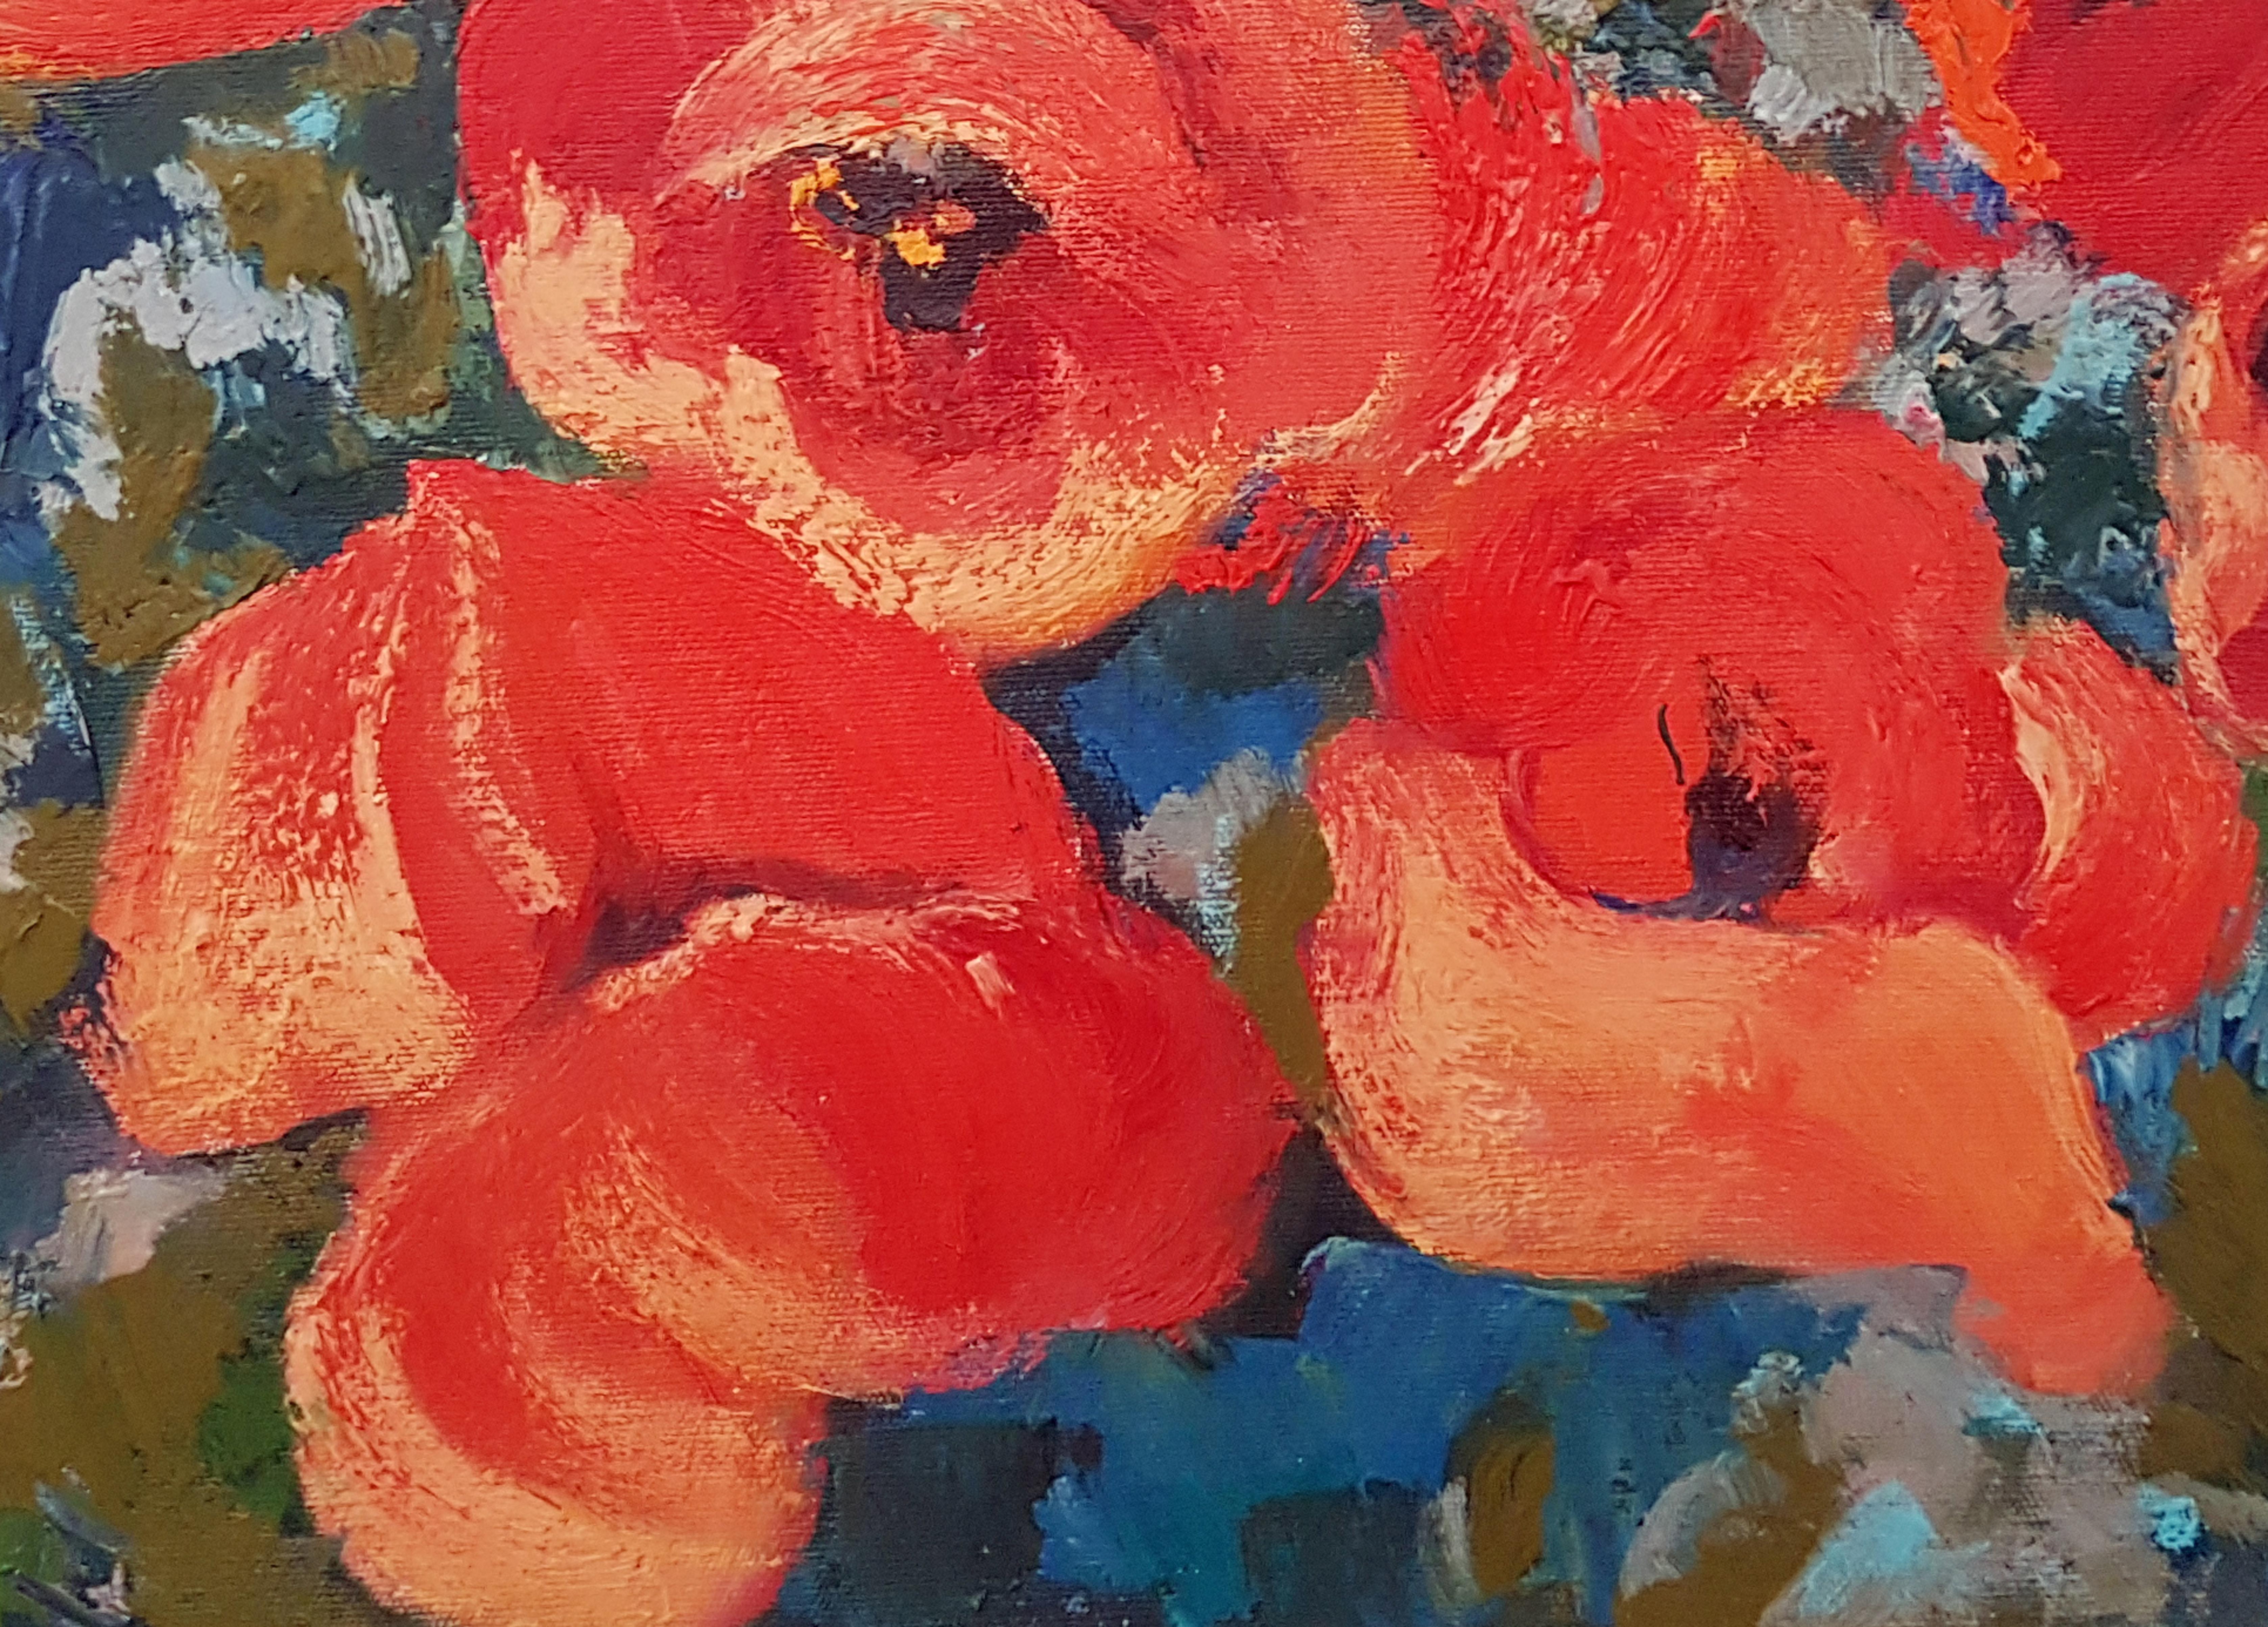 Artist: Ara H. Hakobyan
Work: Original Oil Painting, Handmade Artwork, One of a Kind
Medium: Acrylic on Canvas
Year: 2019
Style: Impressionism
Title: Tulip
Size: 16